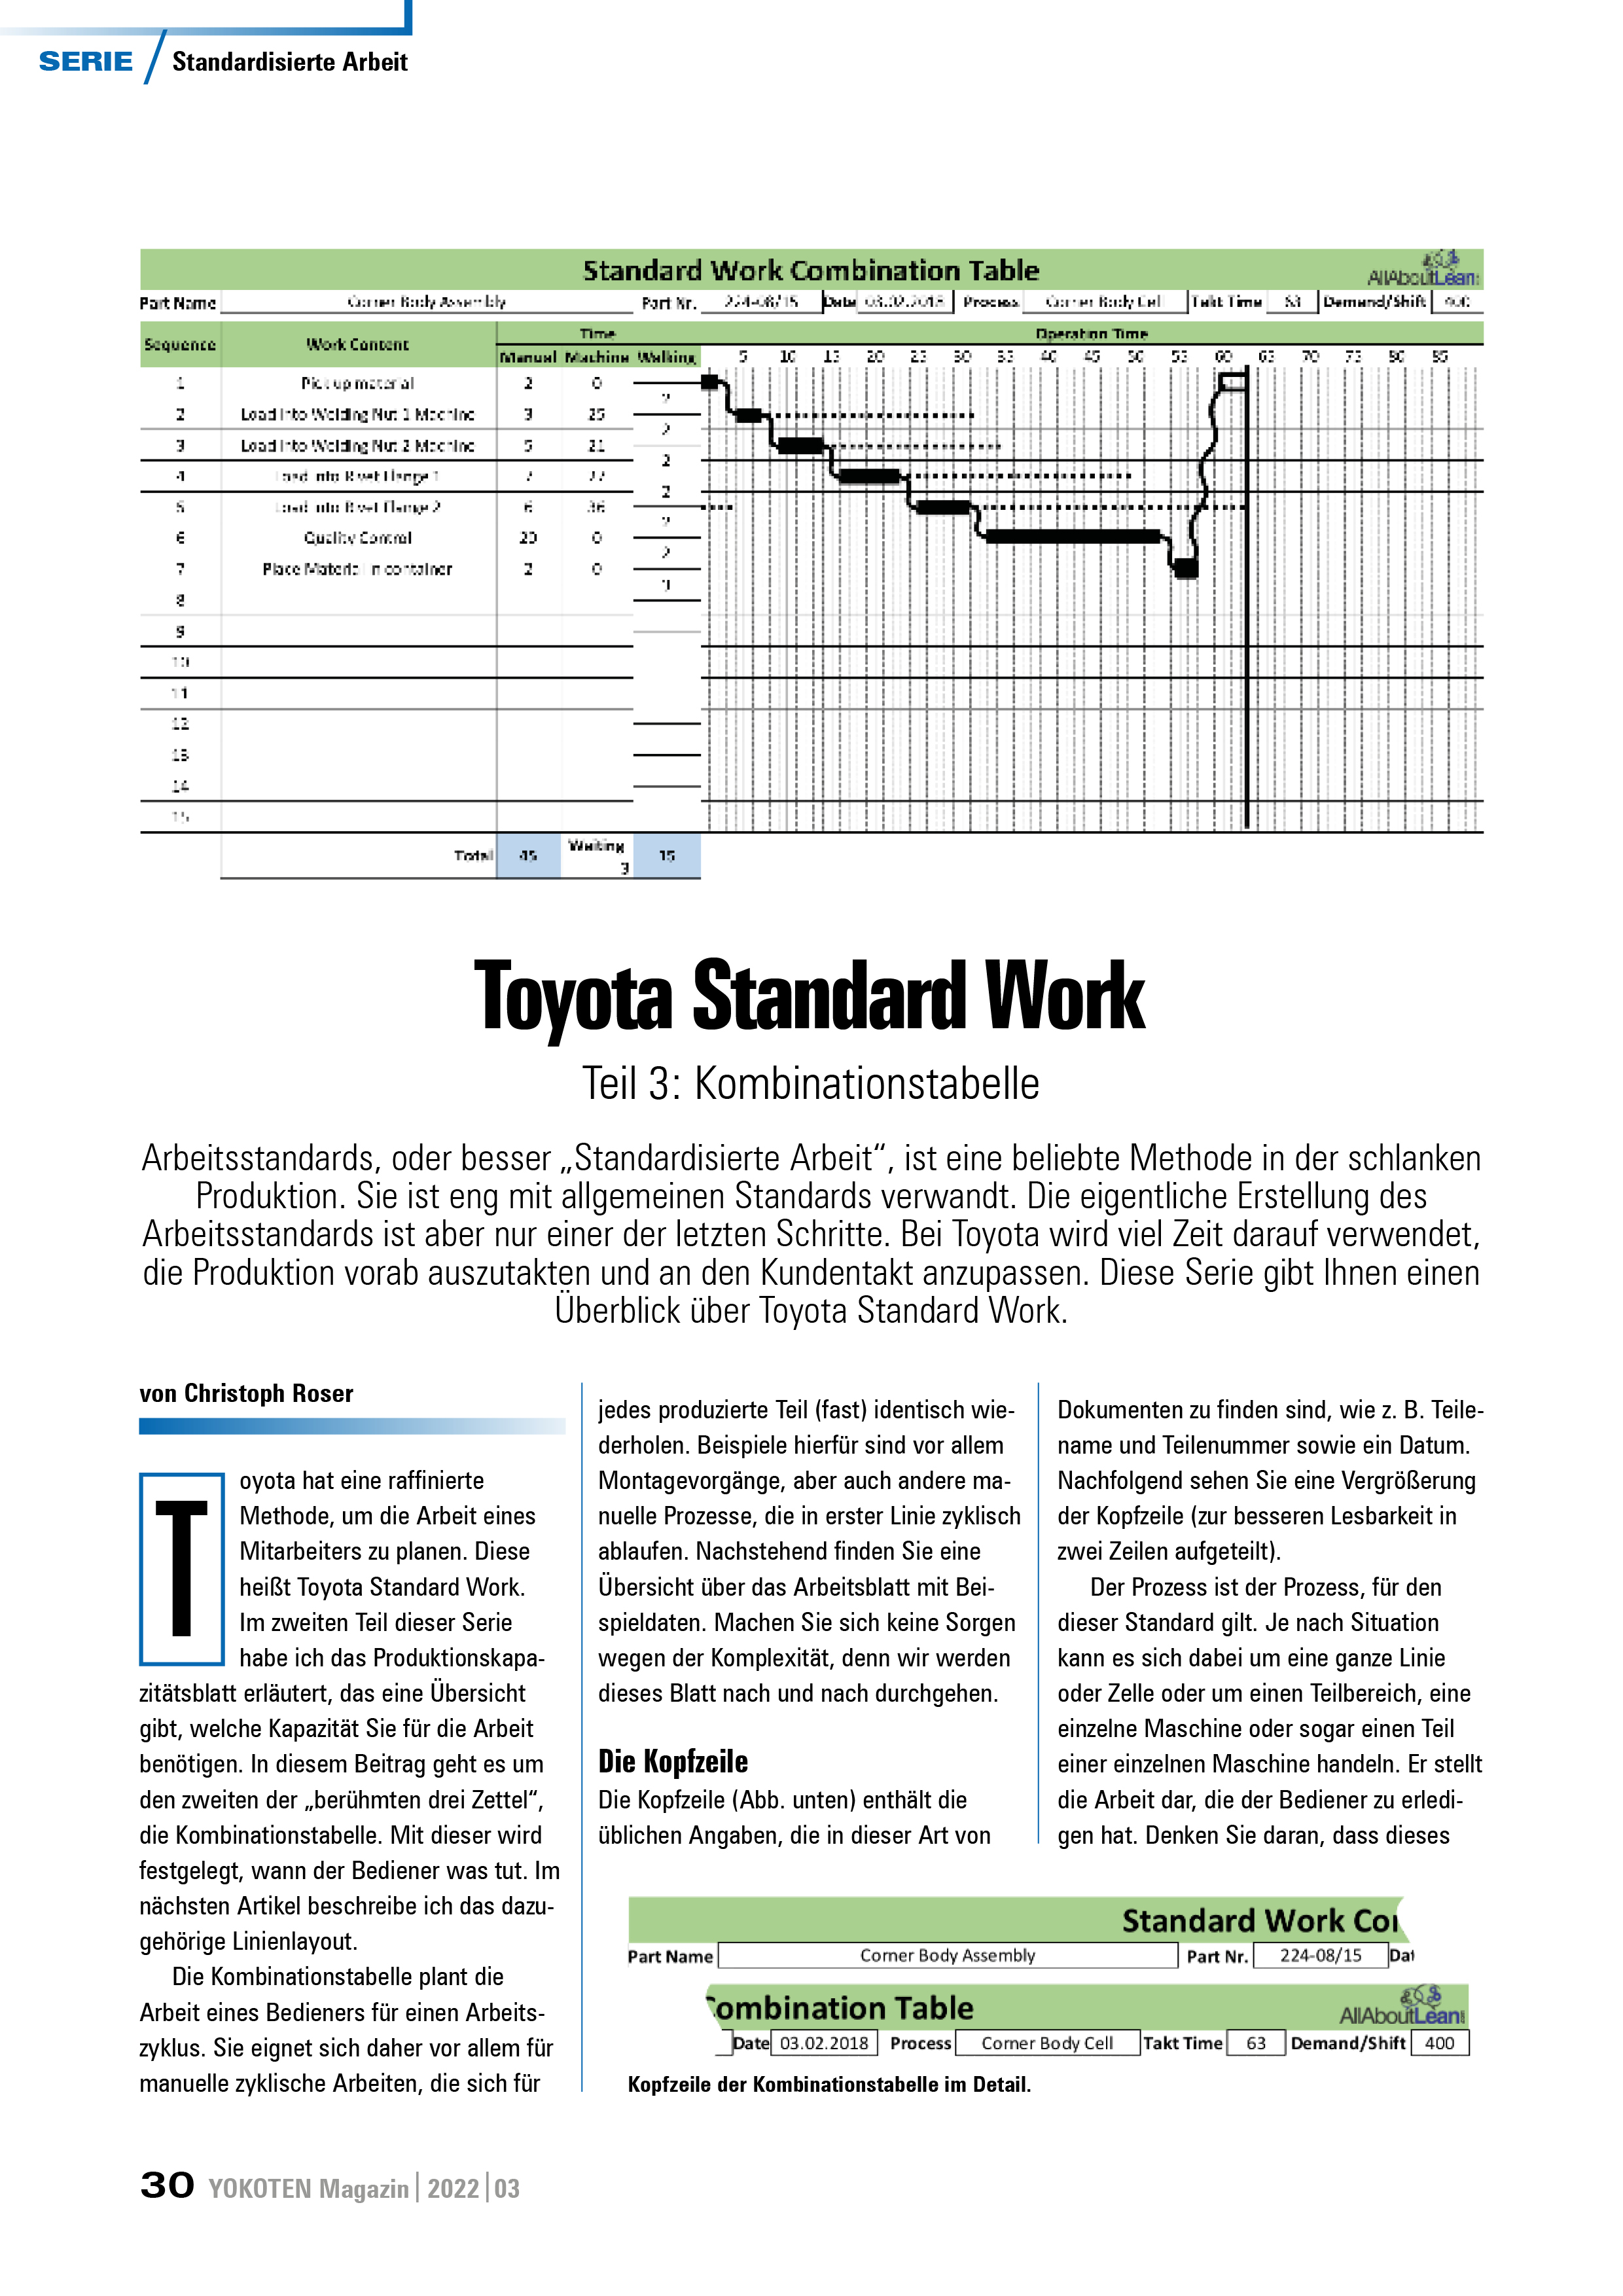 Toyota Standard Work - Artikel aus Fachmagazin YOKOTEN 2022-03